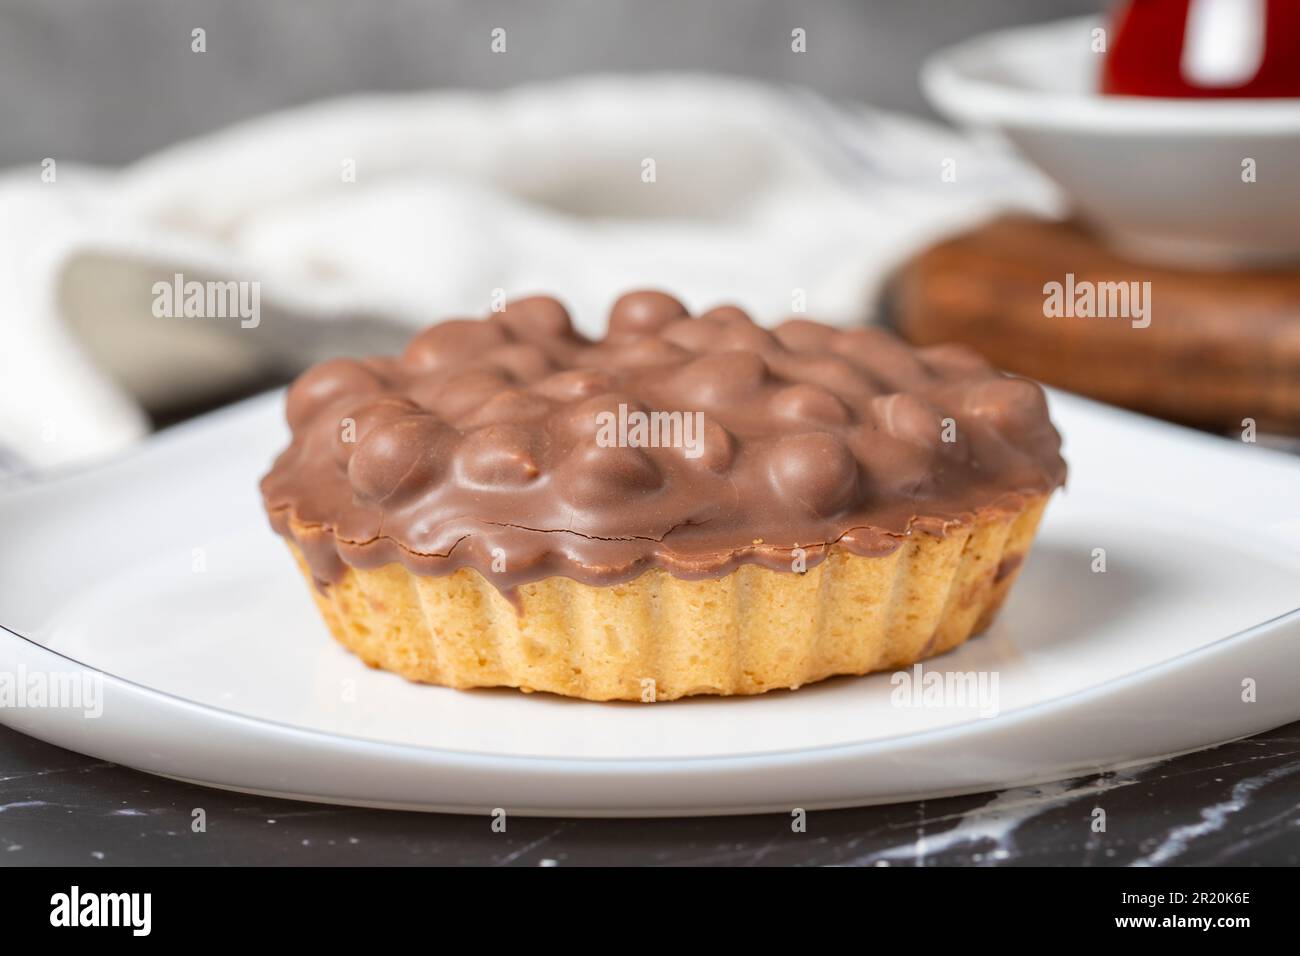 Chocolate pie. Hazelnut, cream and chocolate pie on dark background. Close up Stock Photo